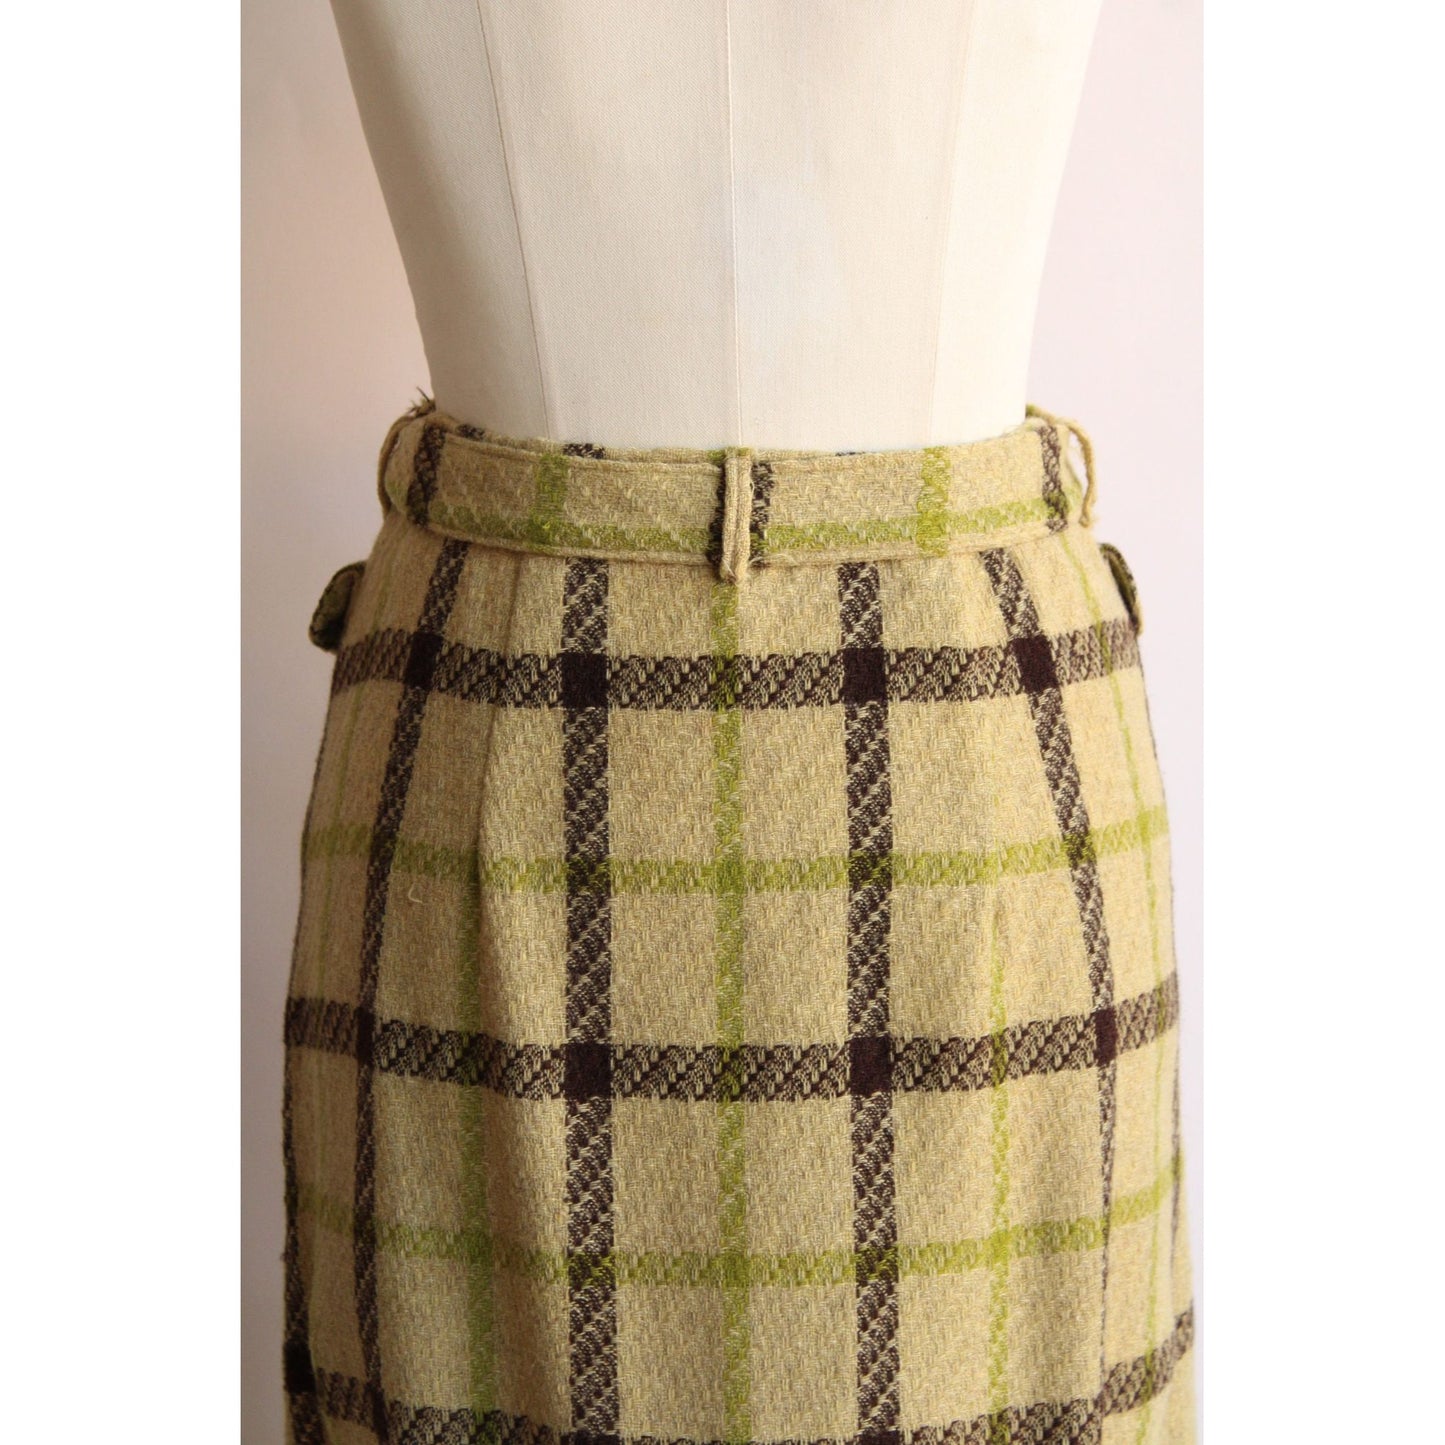 Vintage 1940s Livingston Bros. Plaid Wool Skirt with Pockets